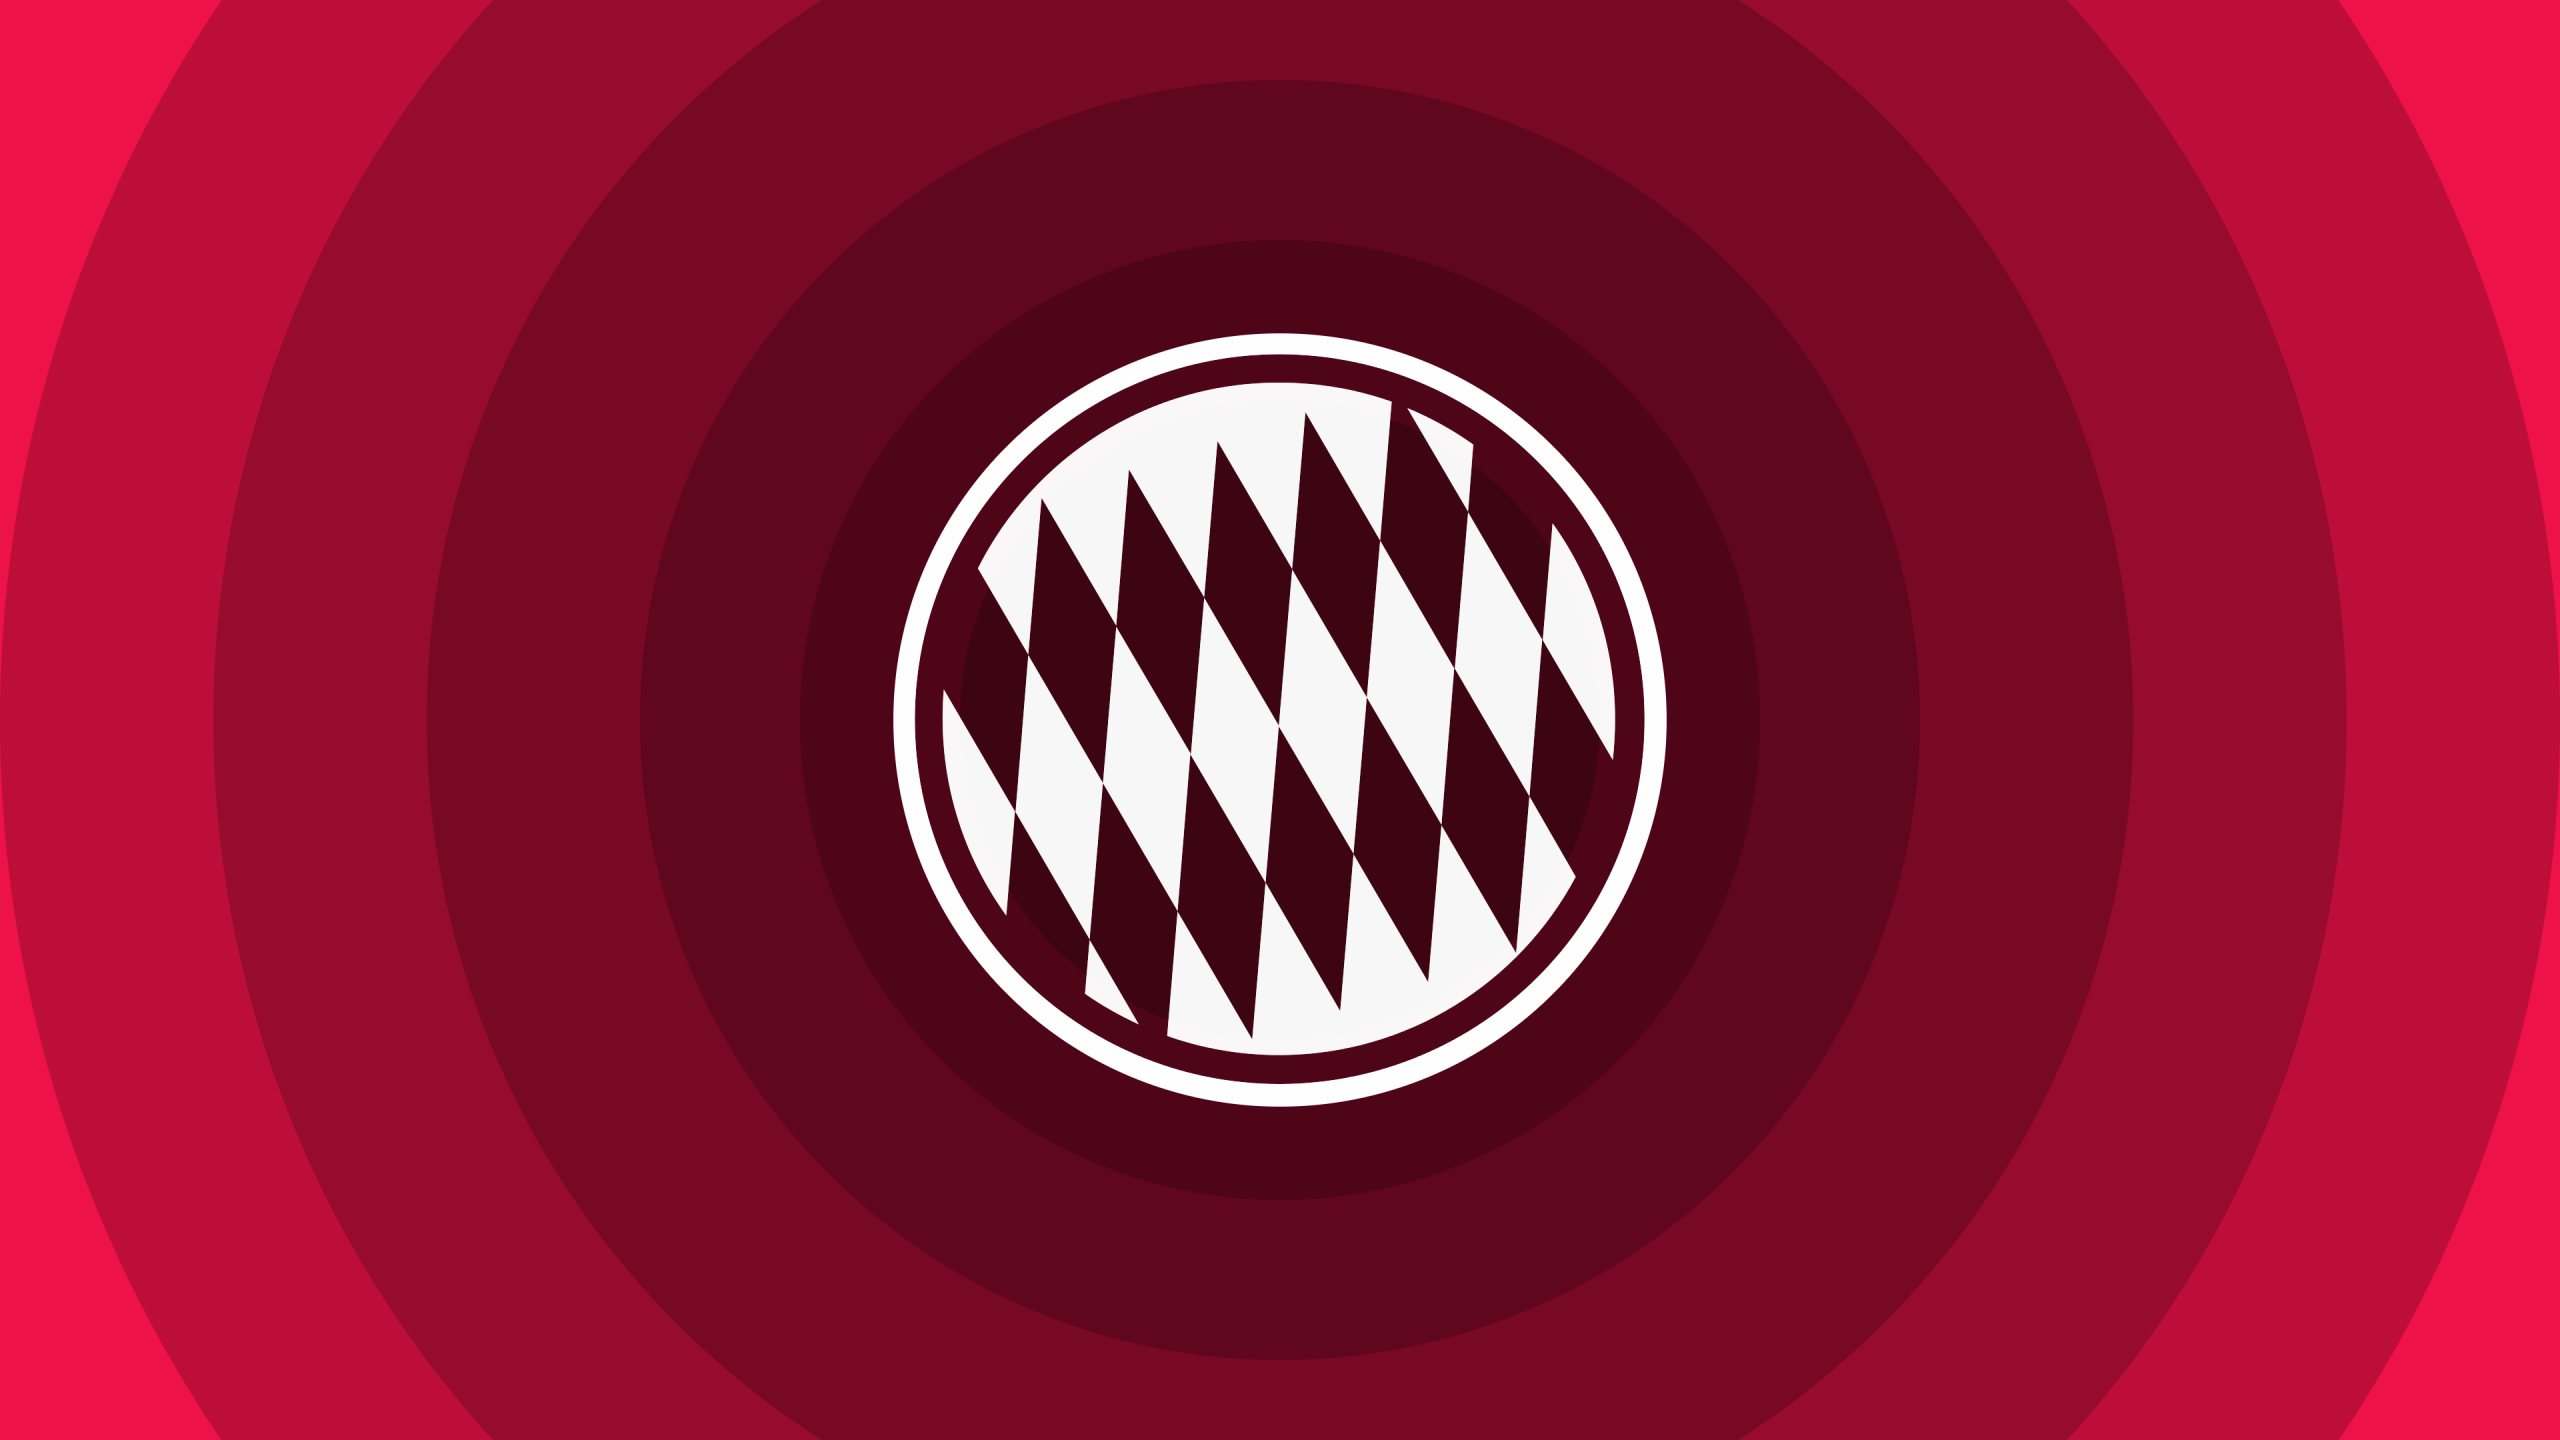 Fc Bayern Munich Minimal Logo At 2560 X 1440 Size Bayern Munchen Red Logo Wallpaper & Background Download